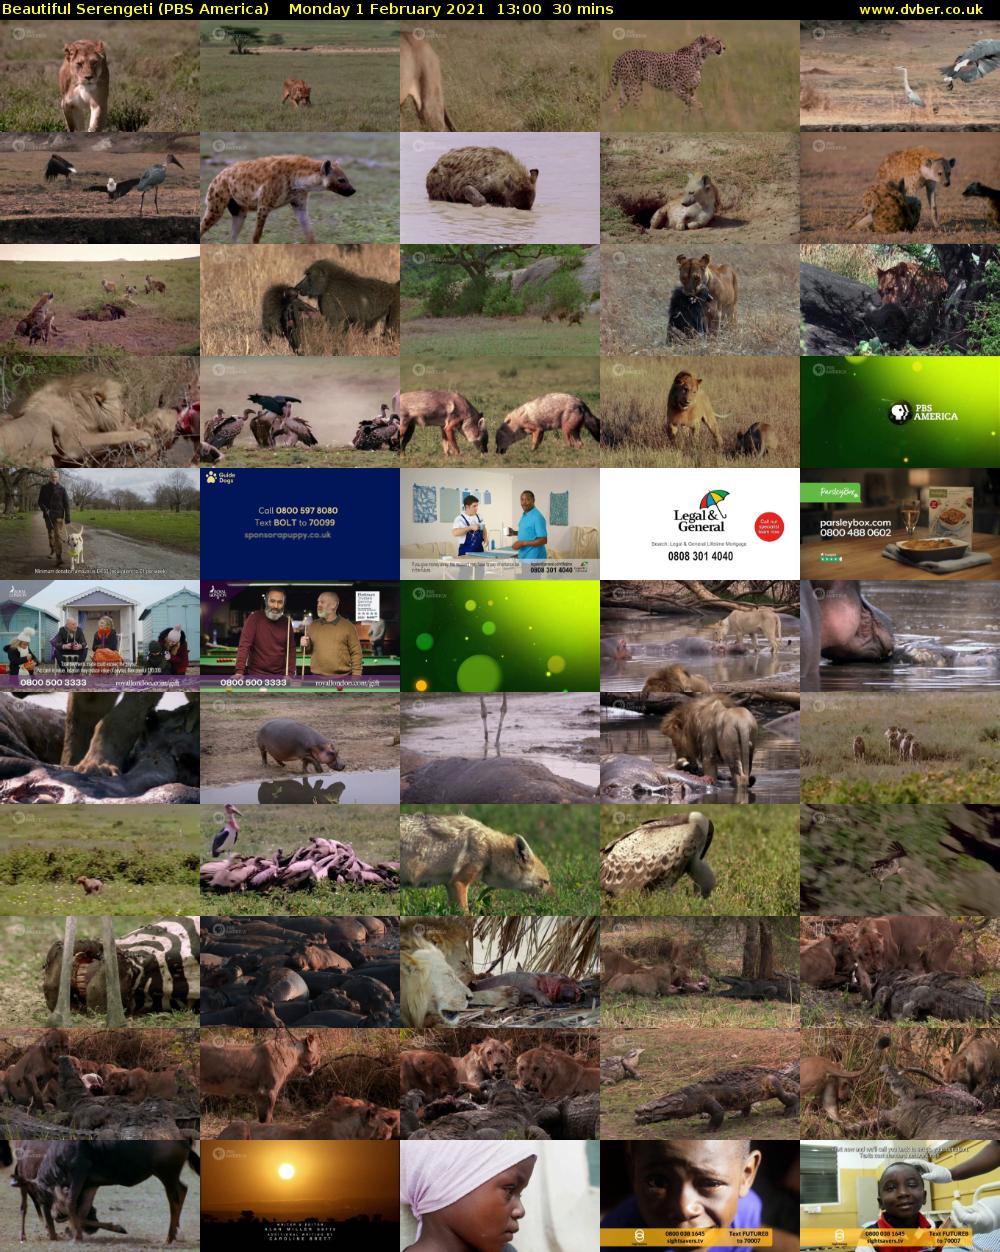 Beautiful Serengeti (PBS America) Monday 1 February 2021 13:00 - 13:30